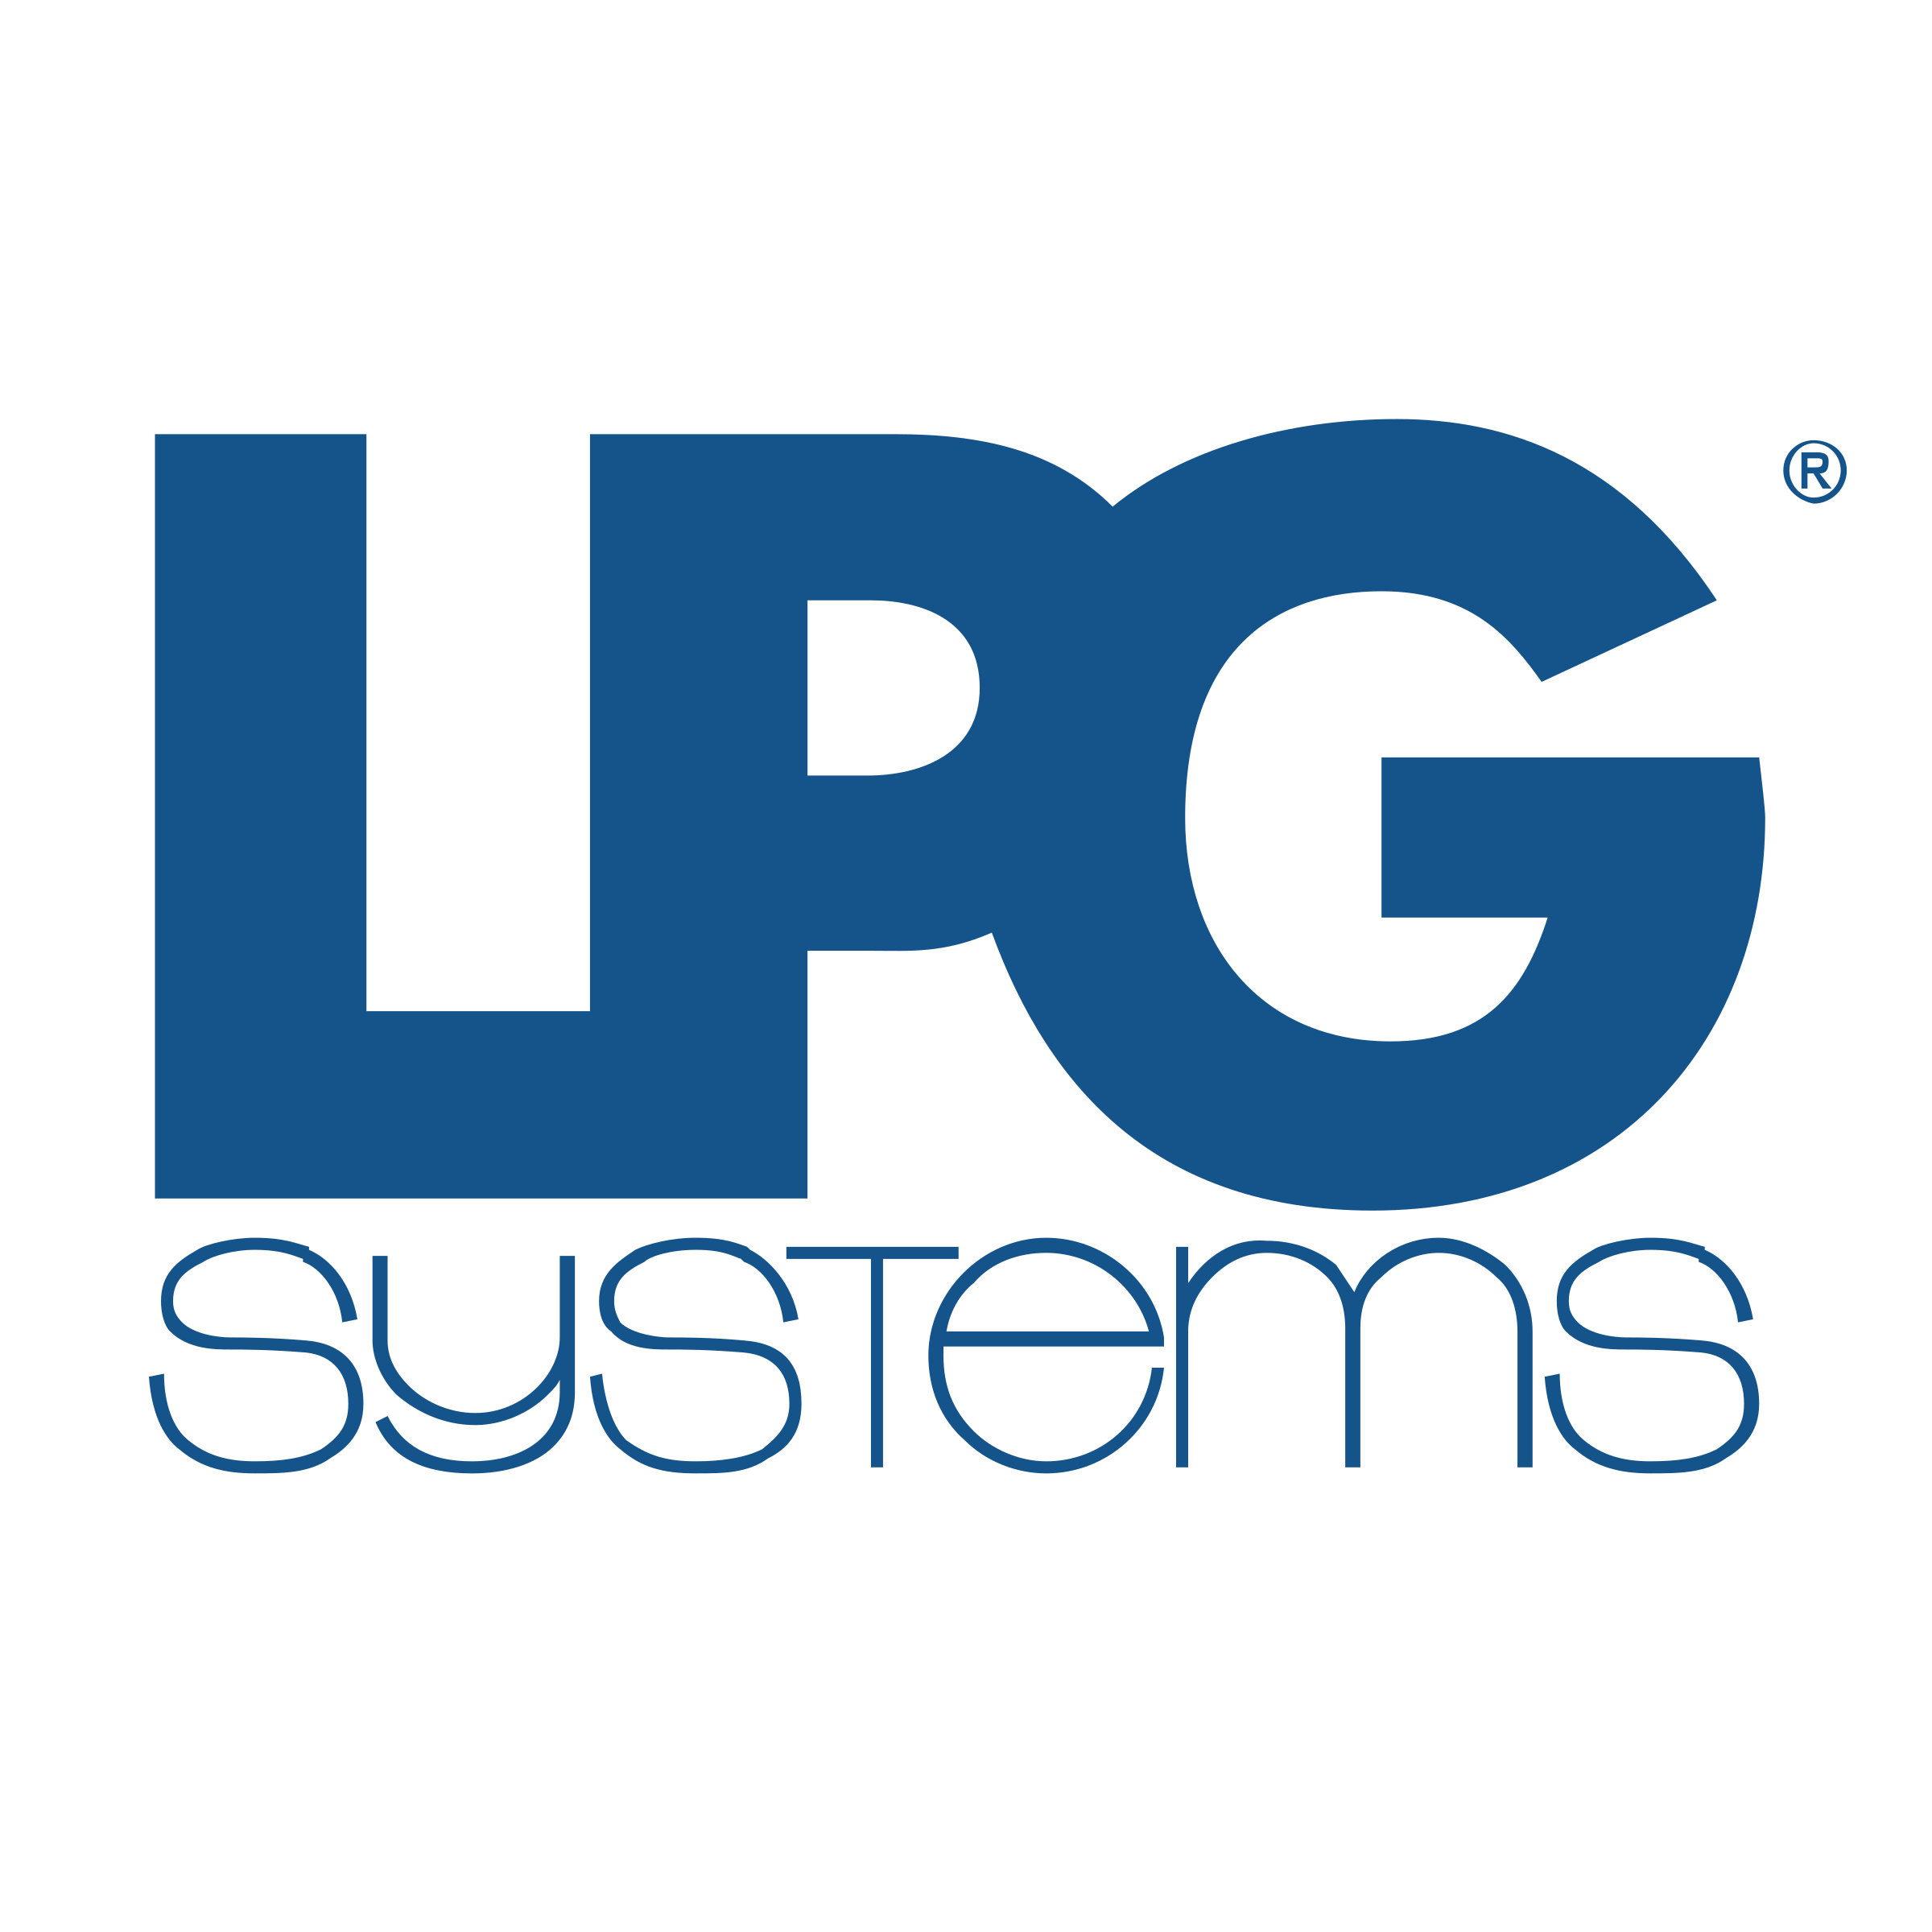 LPG Logo - LPG Systems Logo PNG Transparent & SVG Vector - Freebie Supply